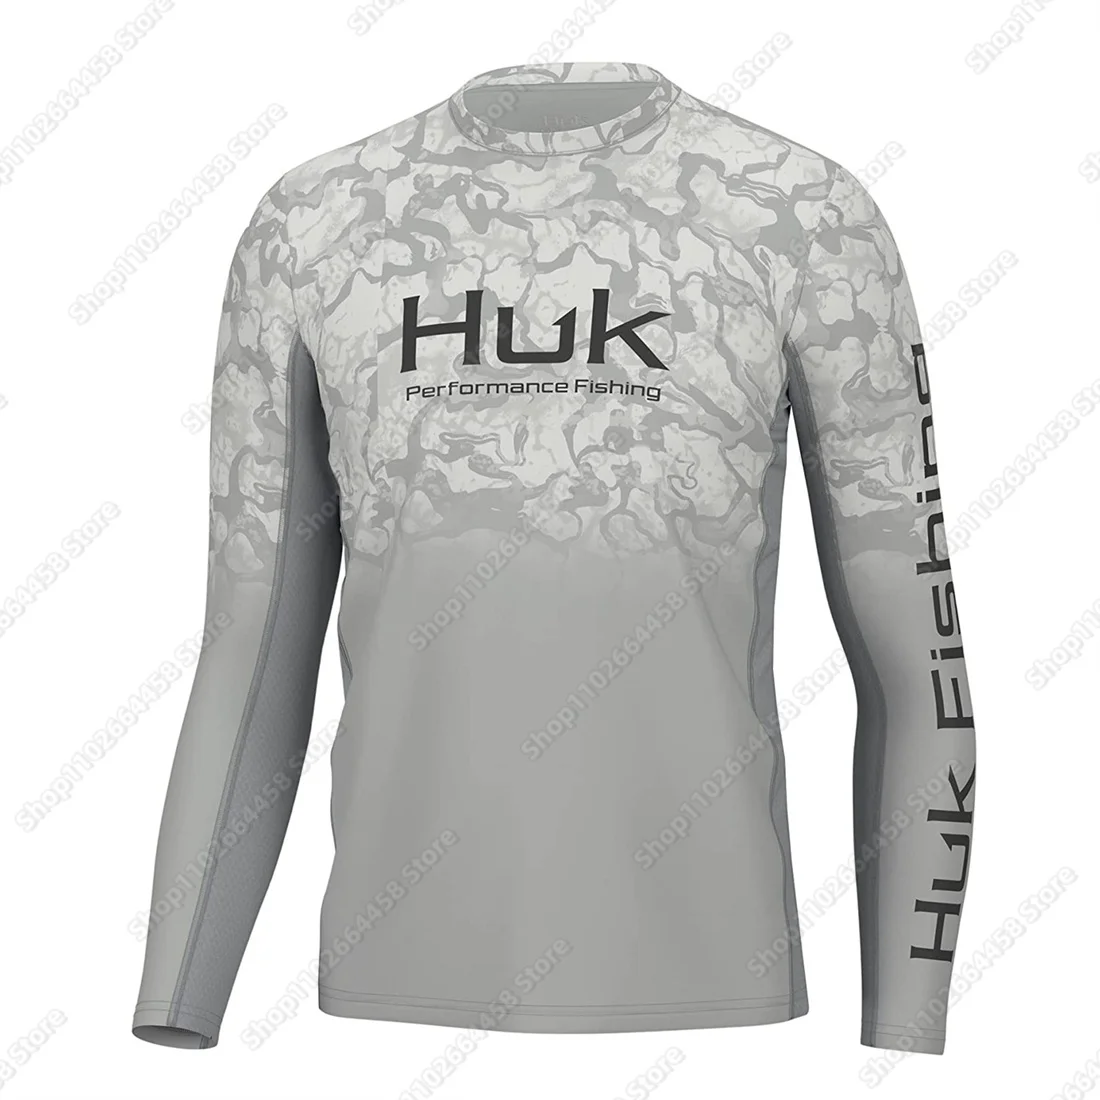 HUK Fishing Shirt Uv Protection Long Sleeve Fishing Clothes UPF 50